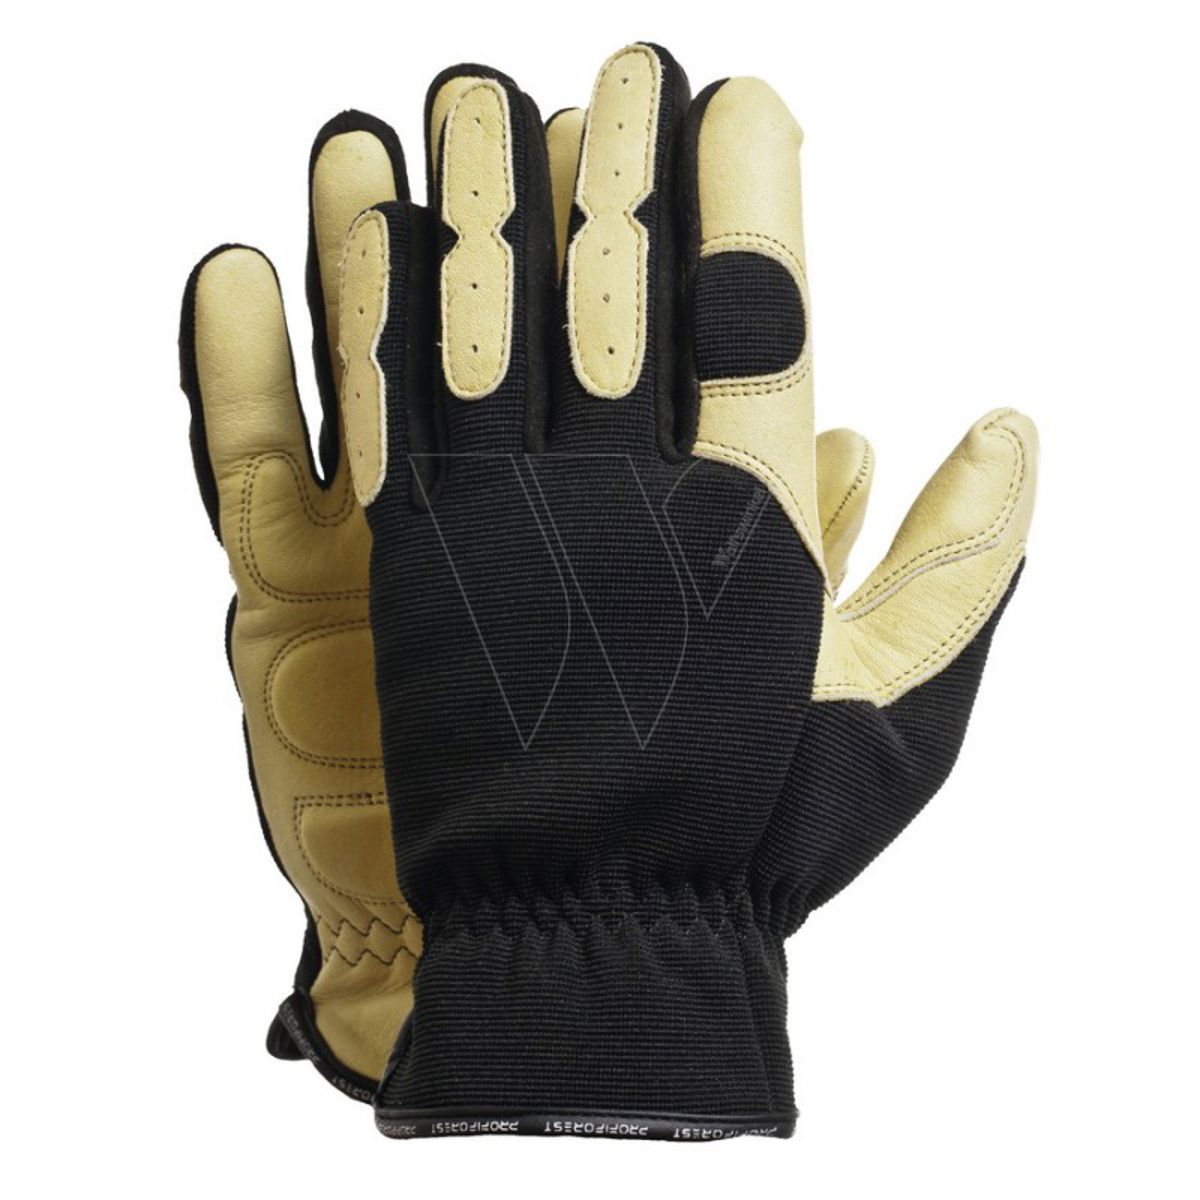 Profiforest antivibration glove 12